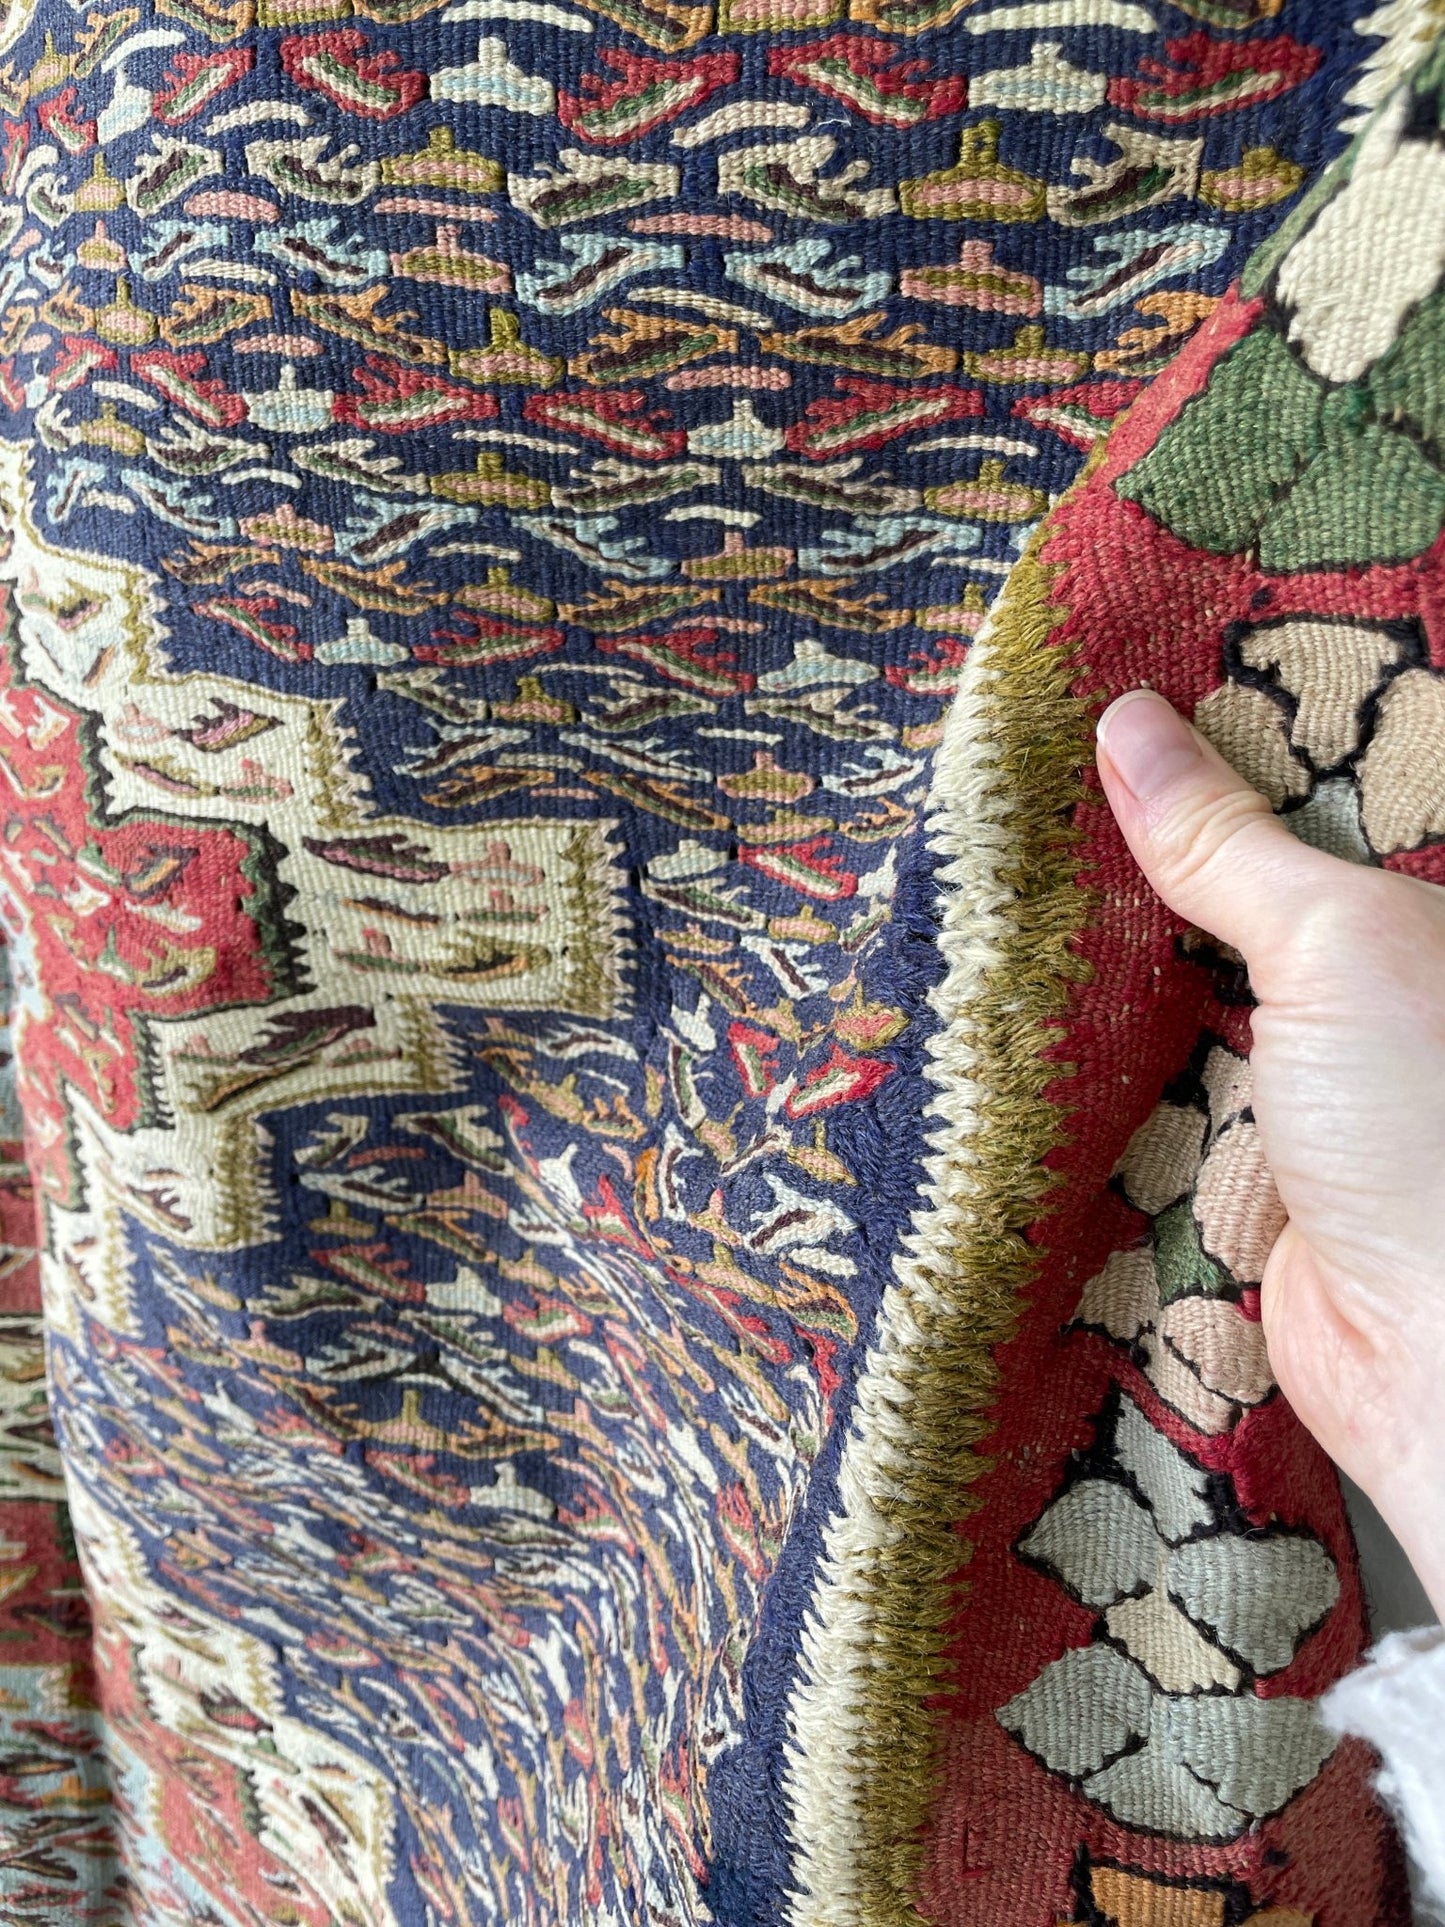 senneh small handmade wool persian kilim rug sdhop san francisco bay area. Buy kilim rug online